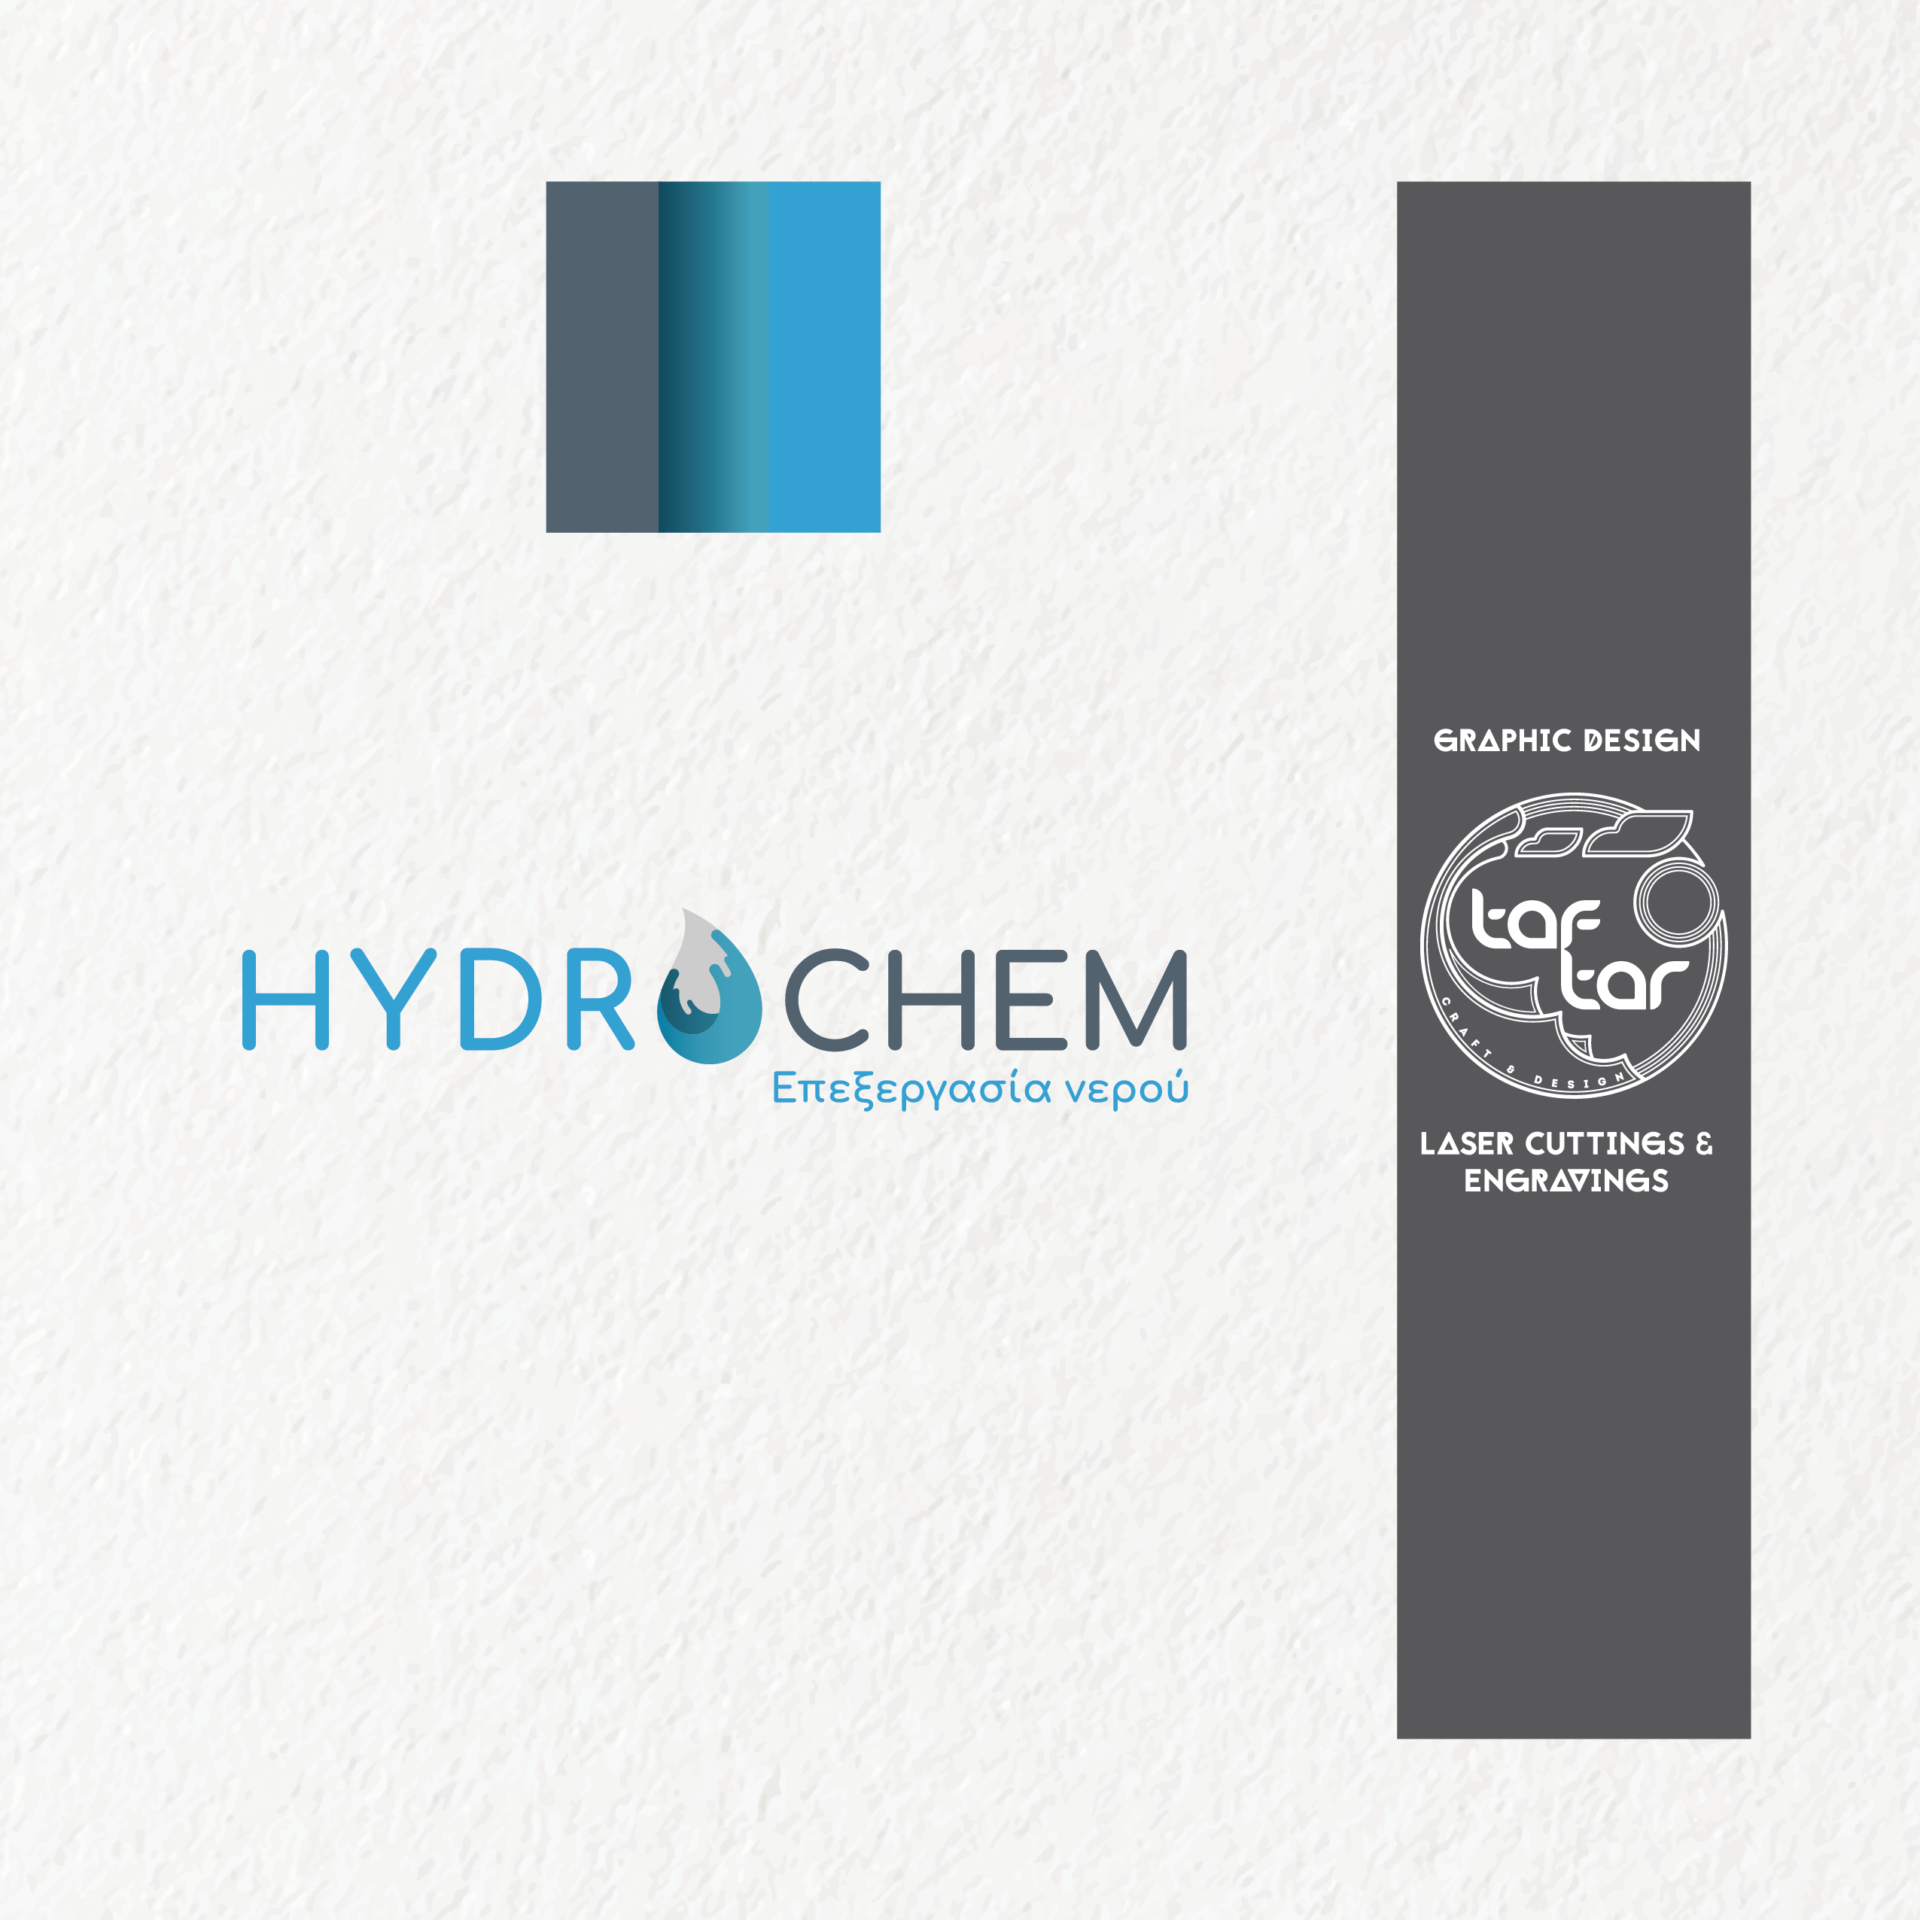 Hydrochem - Επεξεργασία νερού